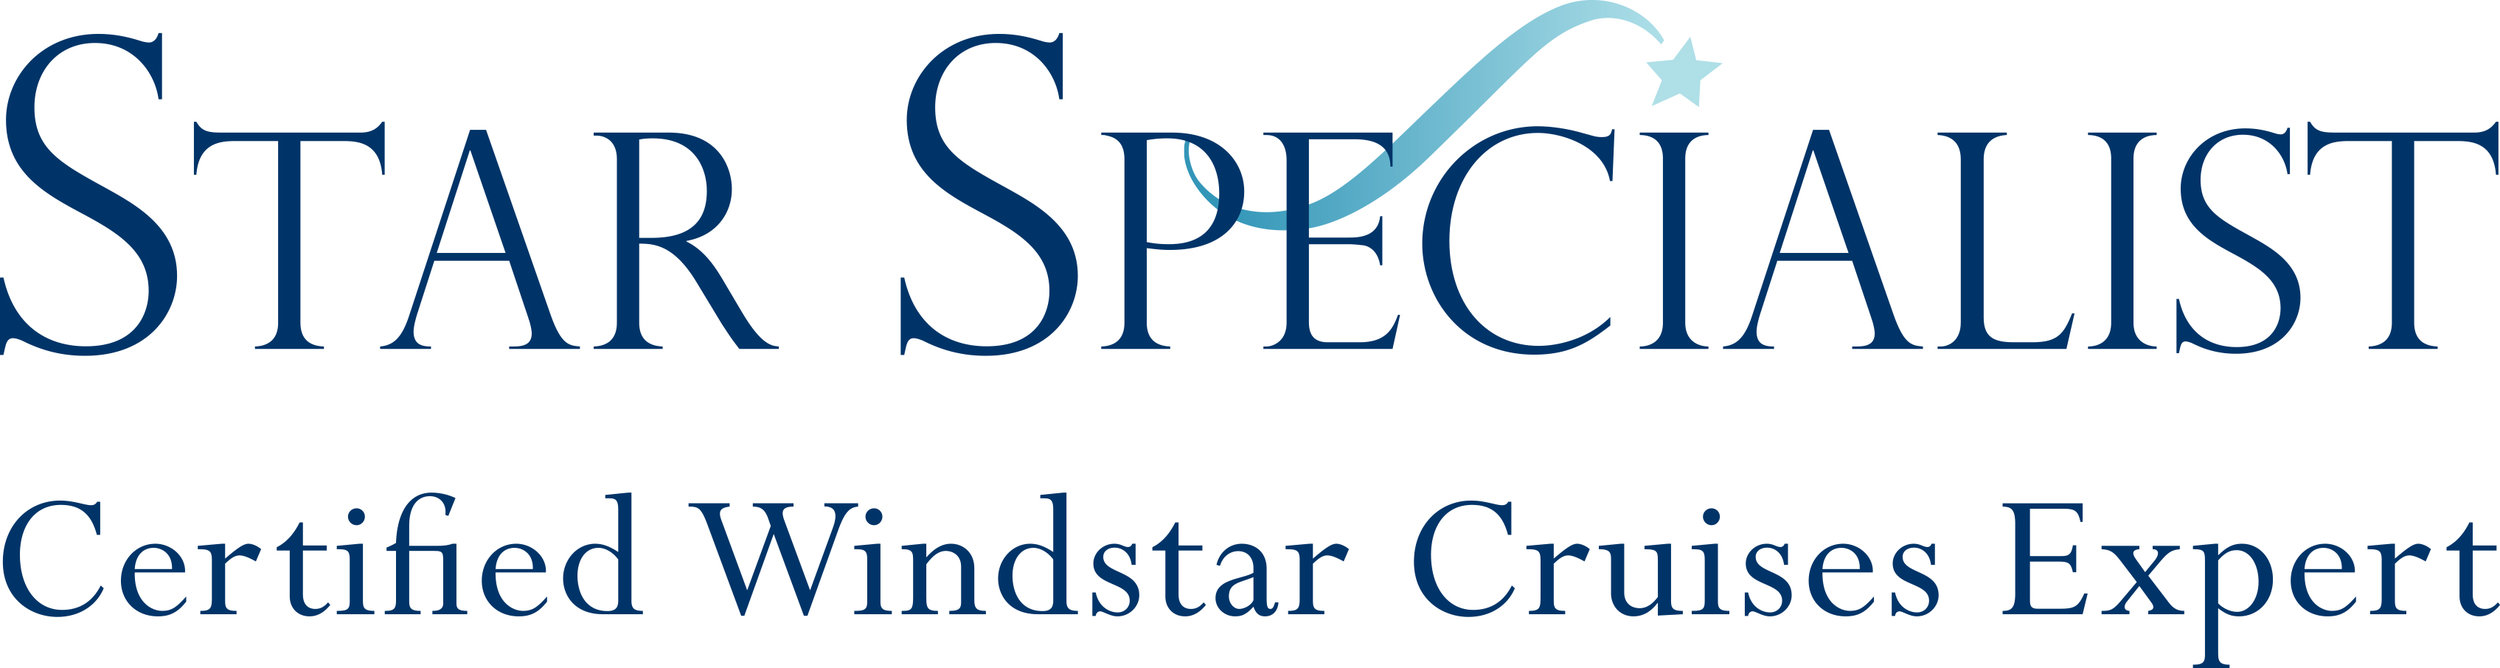 Star Specialist Logo.jpg